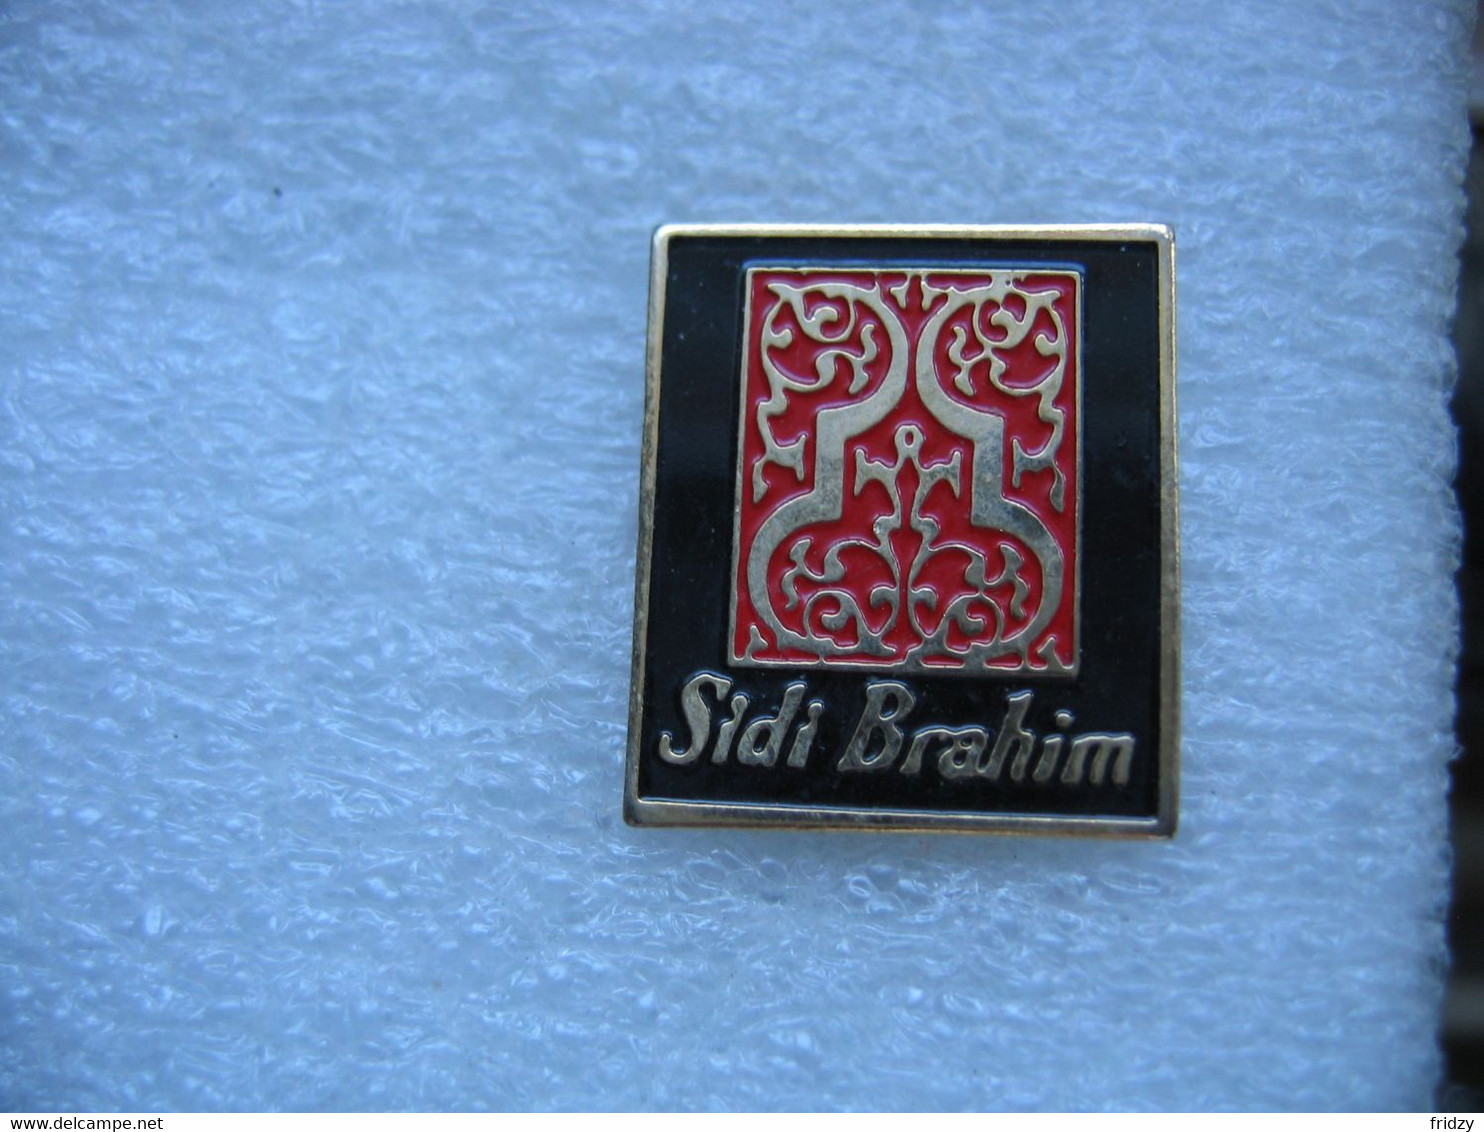 Pin's Embleme Sidi Brahim, Vin Du Maghreb Rouge 12,5° - Boissons